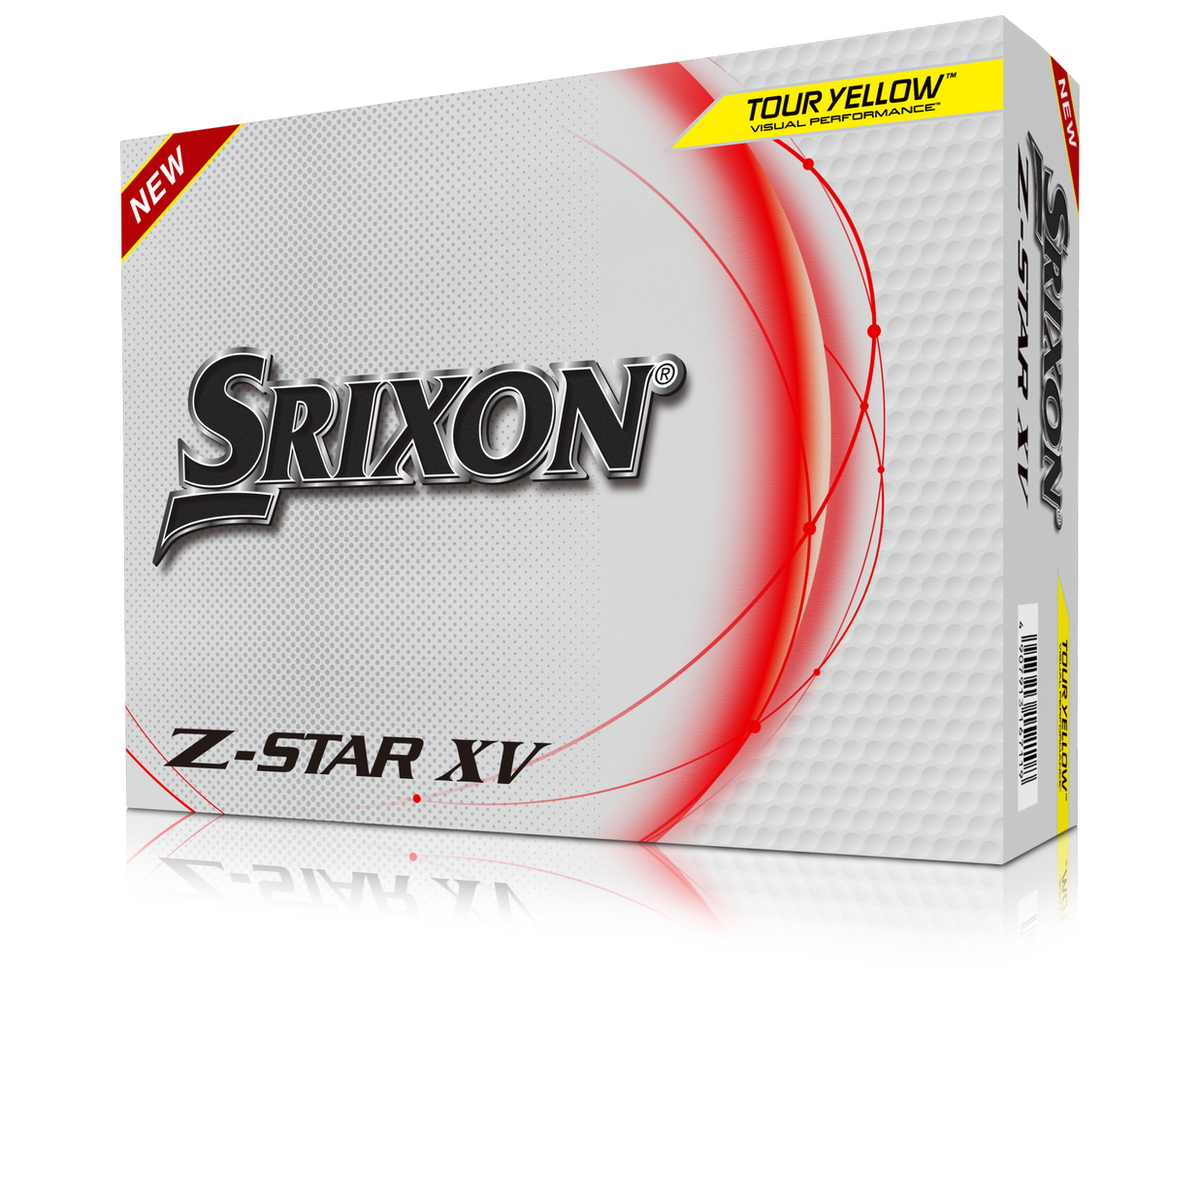 Srixon Z-Star XV Golf Balls - Buy 3 Get 1 Dozen Free - Free Personalization